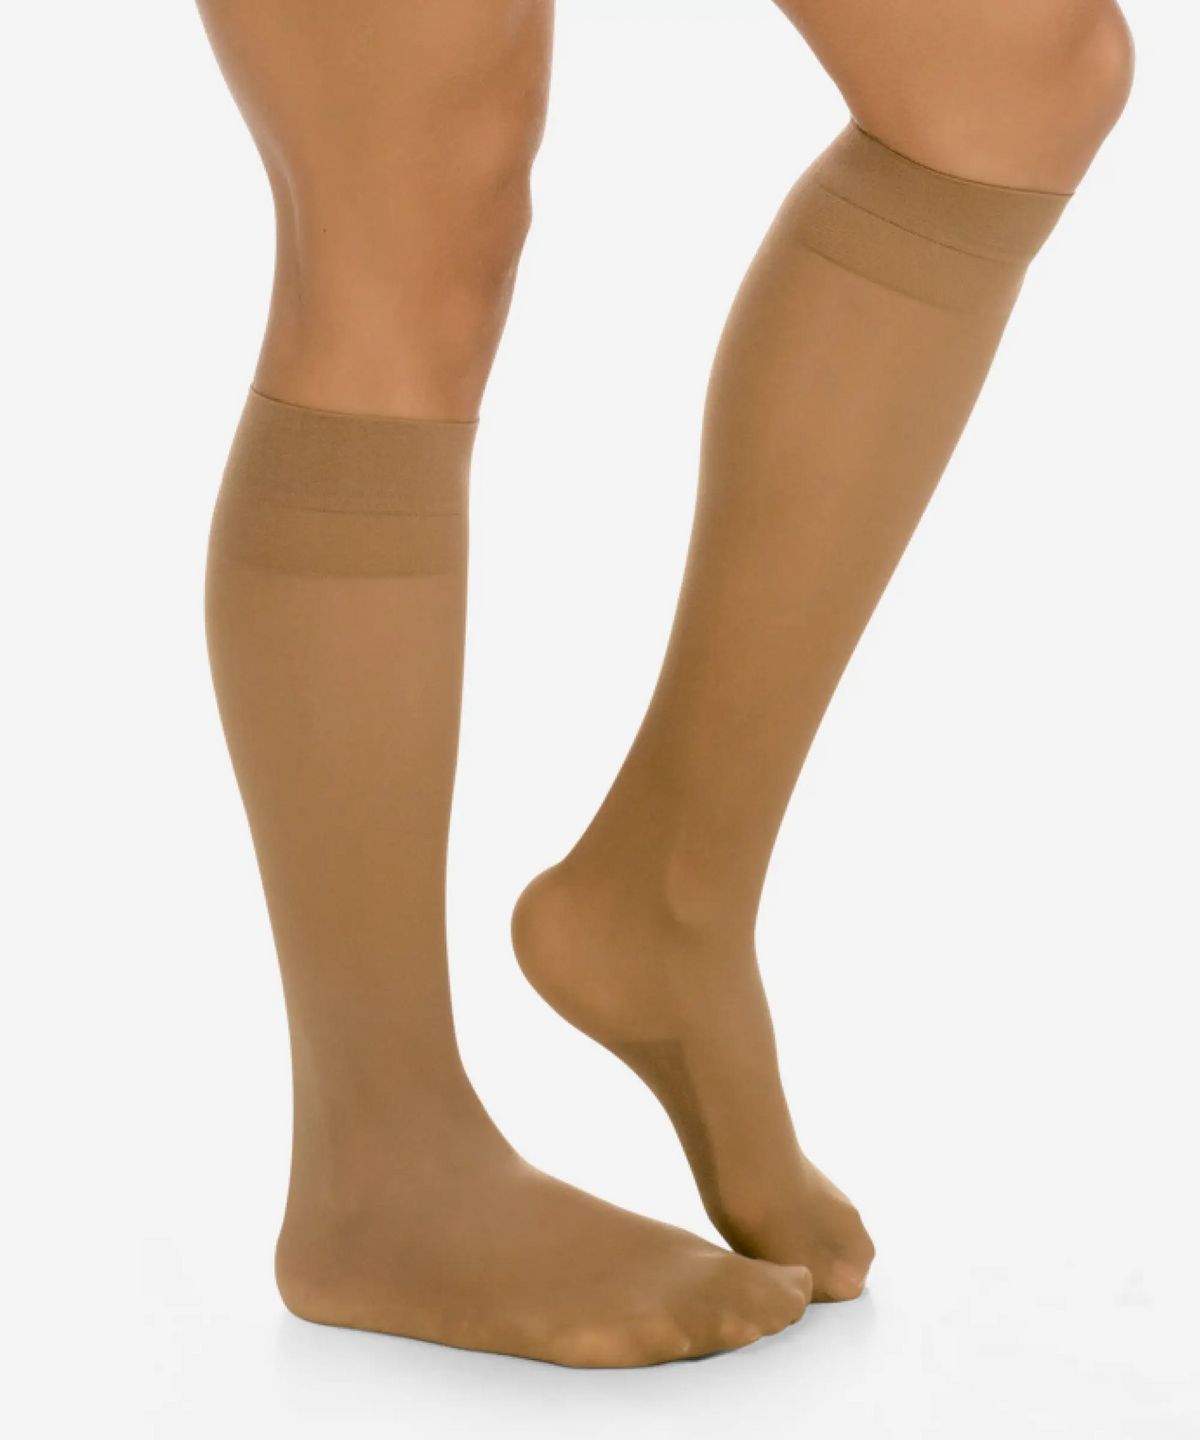 Compression Stockings & Socks for Varicose Veins - Shop Online